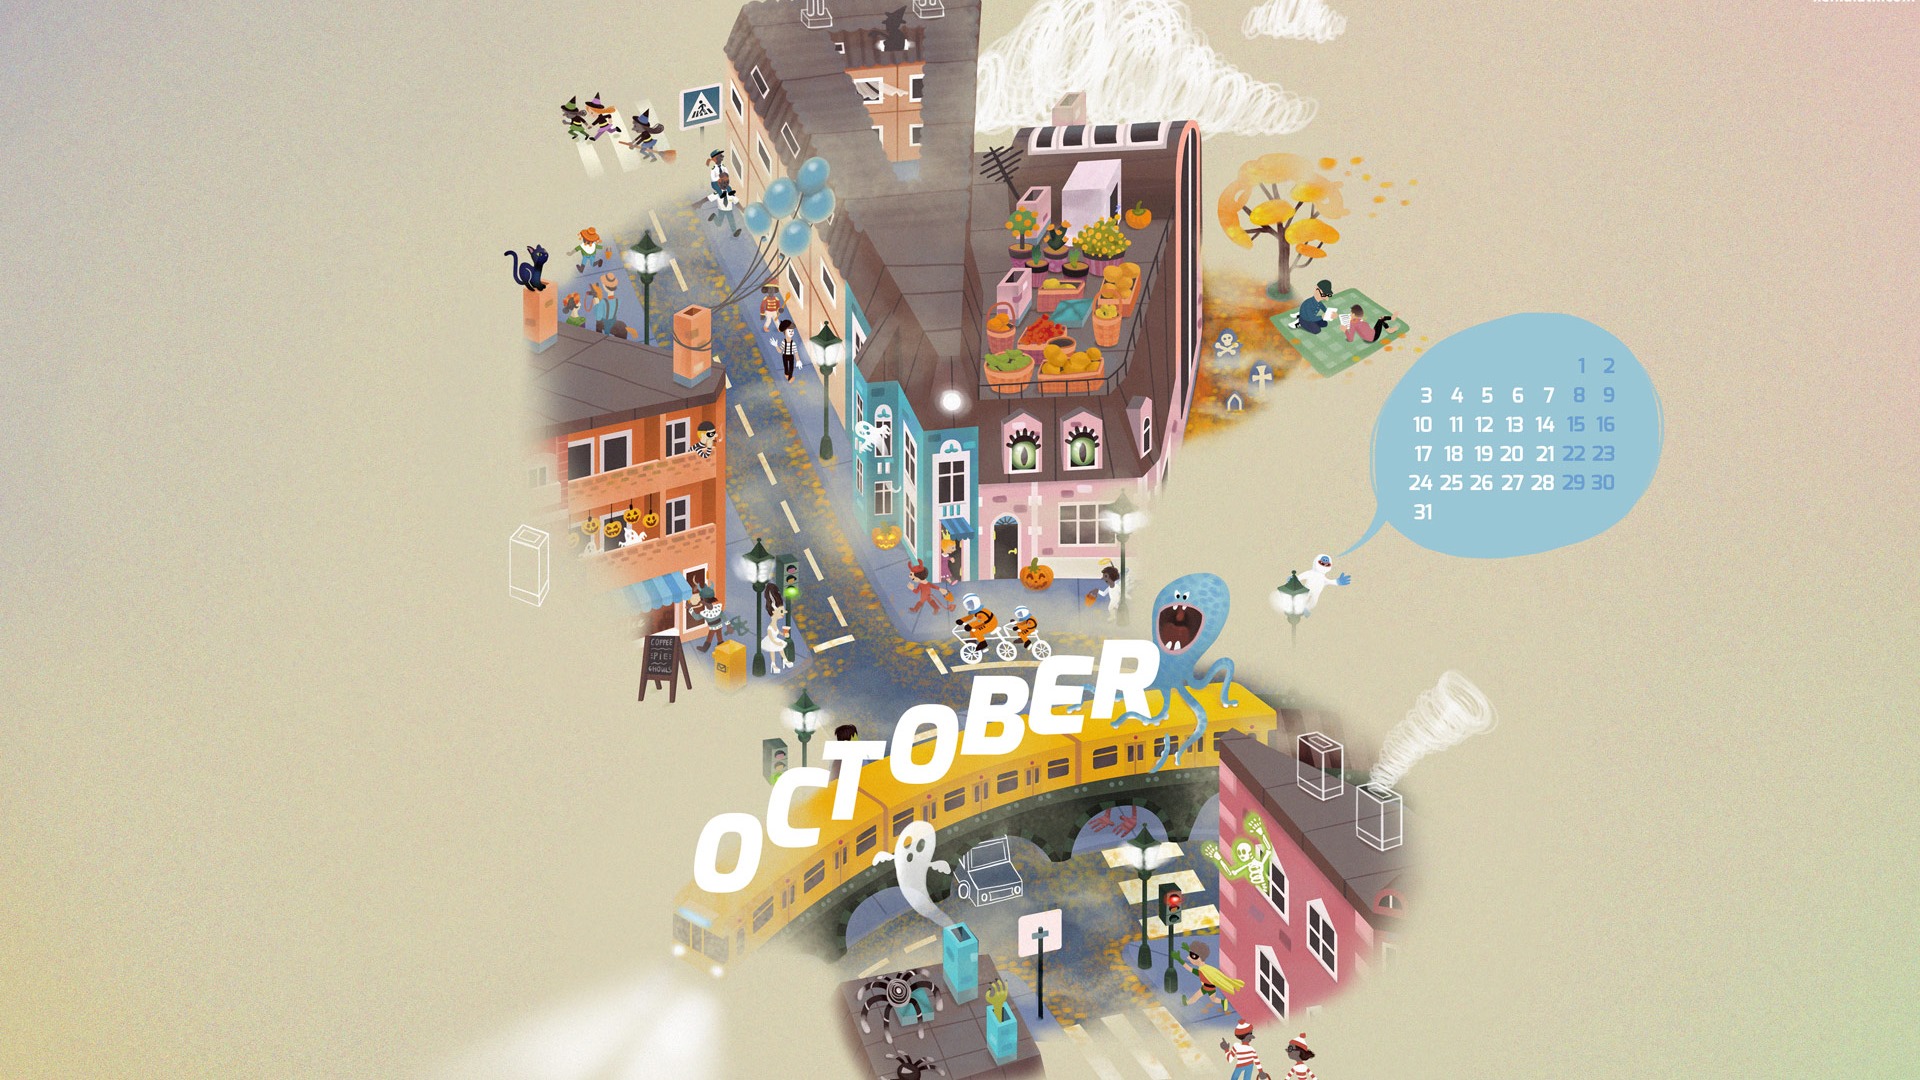 October 2016 calendar wallpaper (2) #16 - 1920x1080